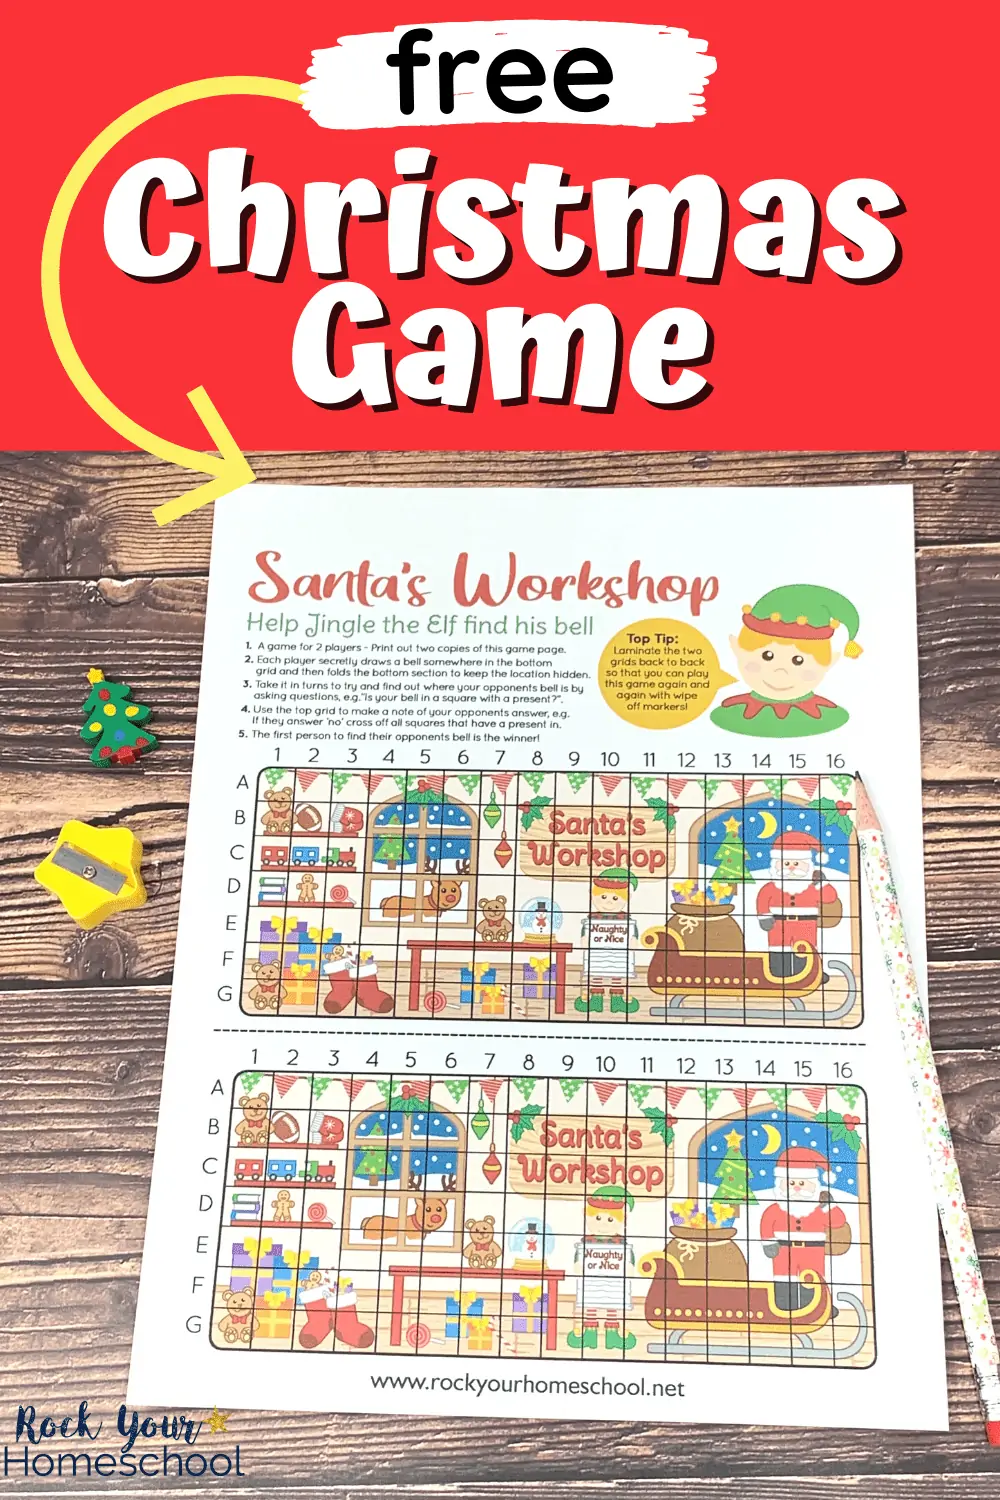 Free Printable Christmas Game for Interactive Holiday Fun for Kids